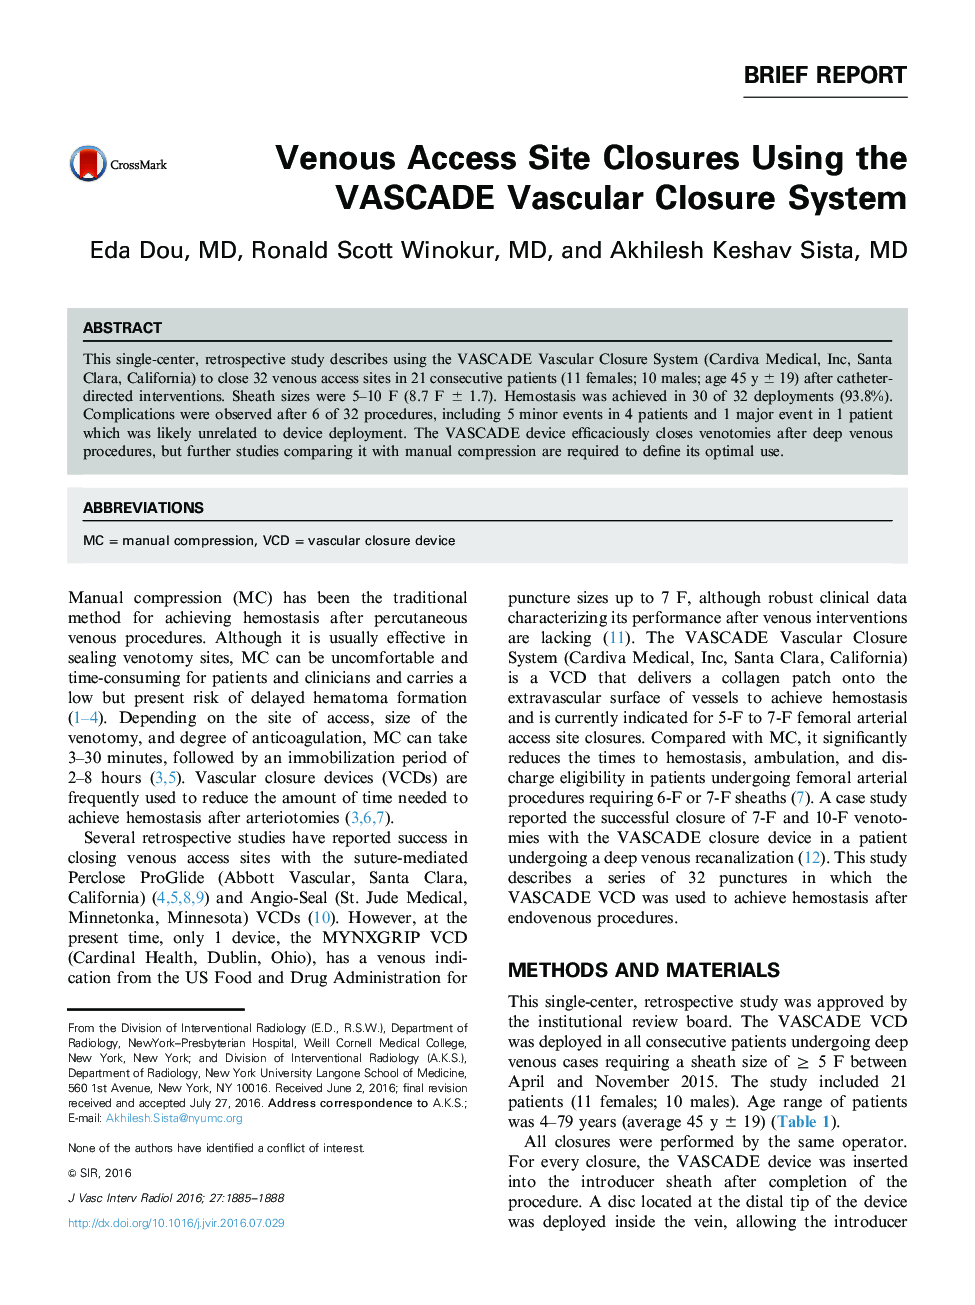 Venous Access Site Closures Using the VASCADE Vascular Closure System